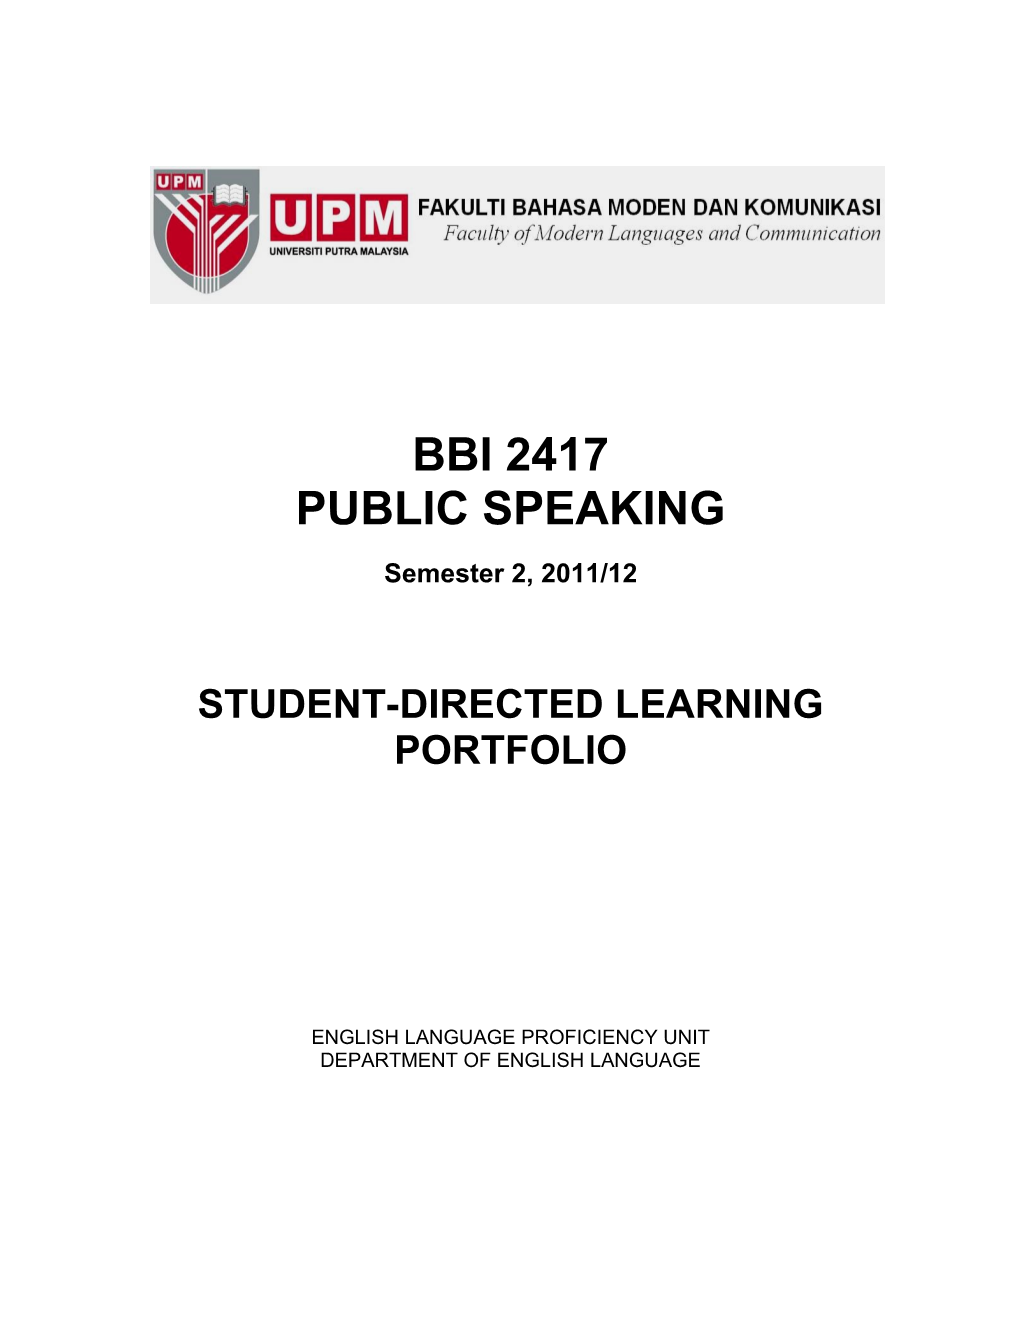 Student-Directedlearning Portfolio